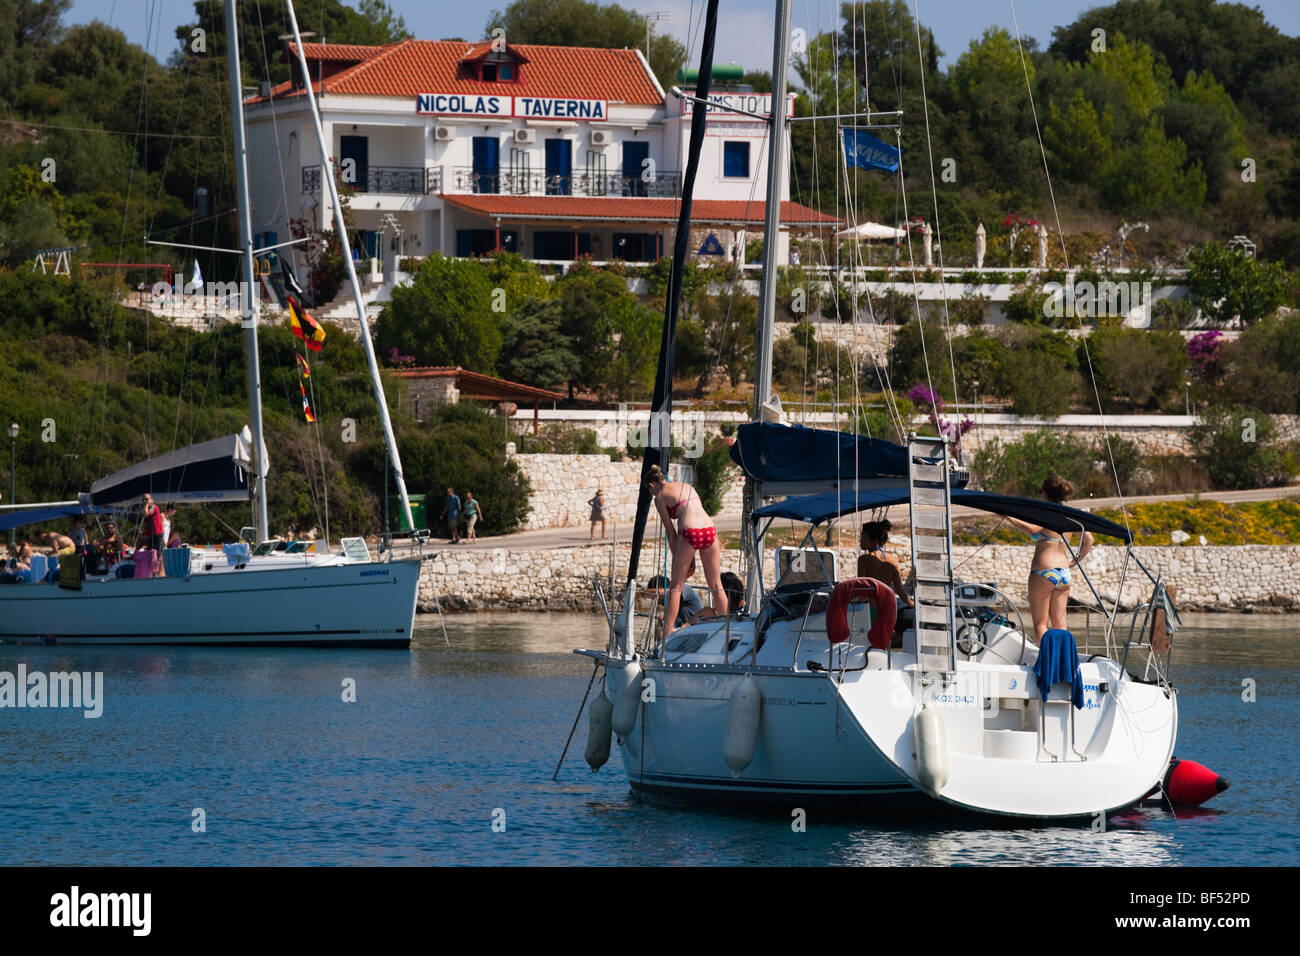 Fiskardo port Kefalonia island Greece - survivor of the 1953 earthquake - cruising yacht with restaurant in background Stock Photo